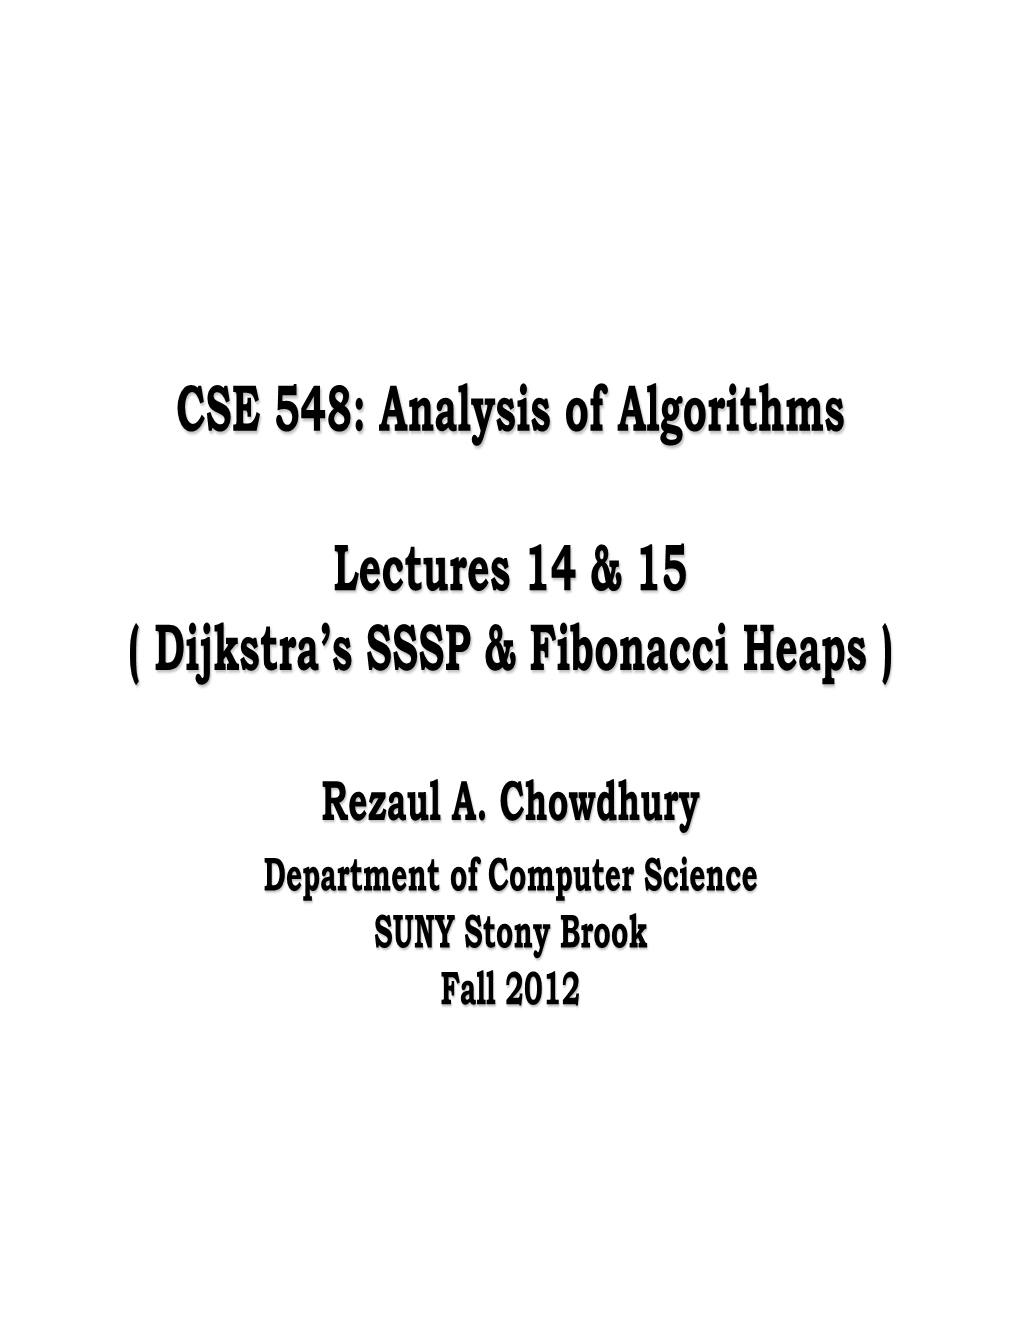 Dijkstra's SSSP & Fibonacci Heaps